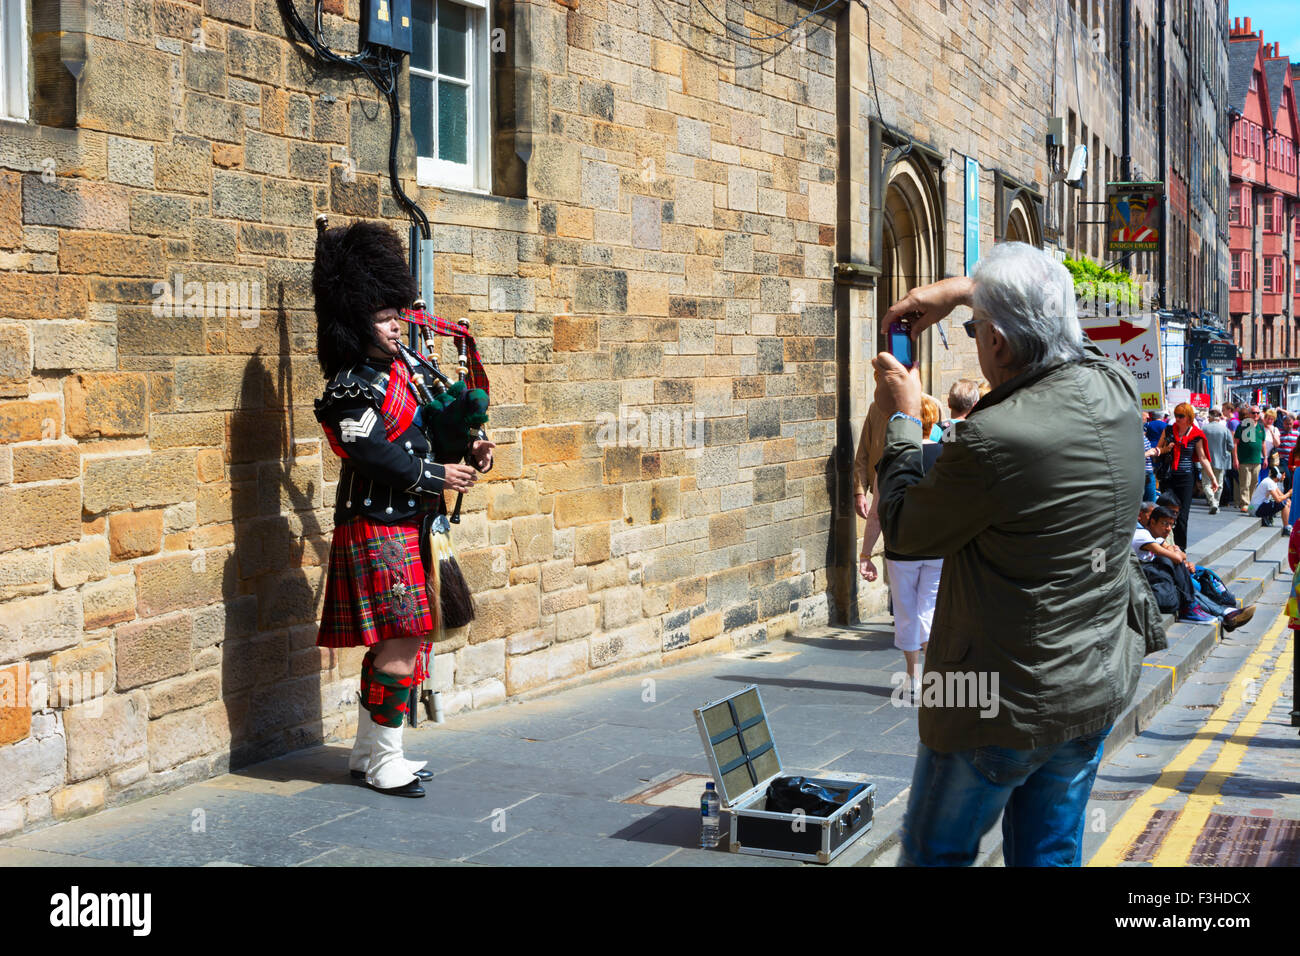 EDINBURGH, SCOTLAND - JUNE 11, 2015: Scottish Bagpiper playing his bagpipe in the Old Town of Edinburgh in Scotland Stock Photo